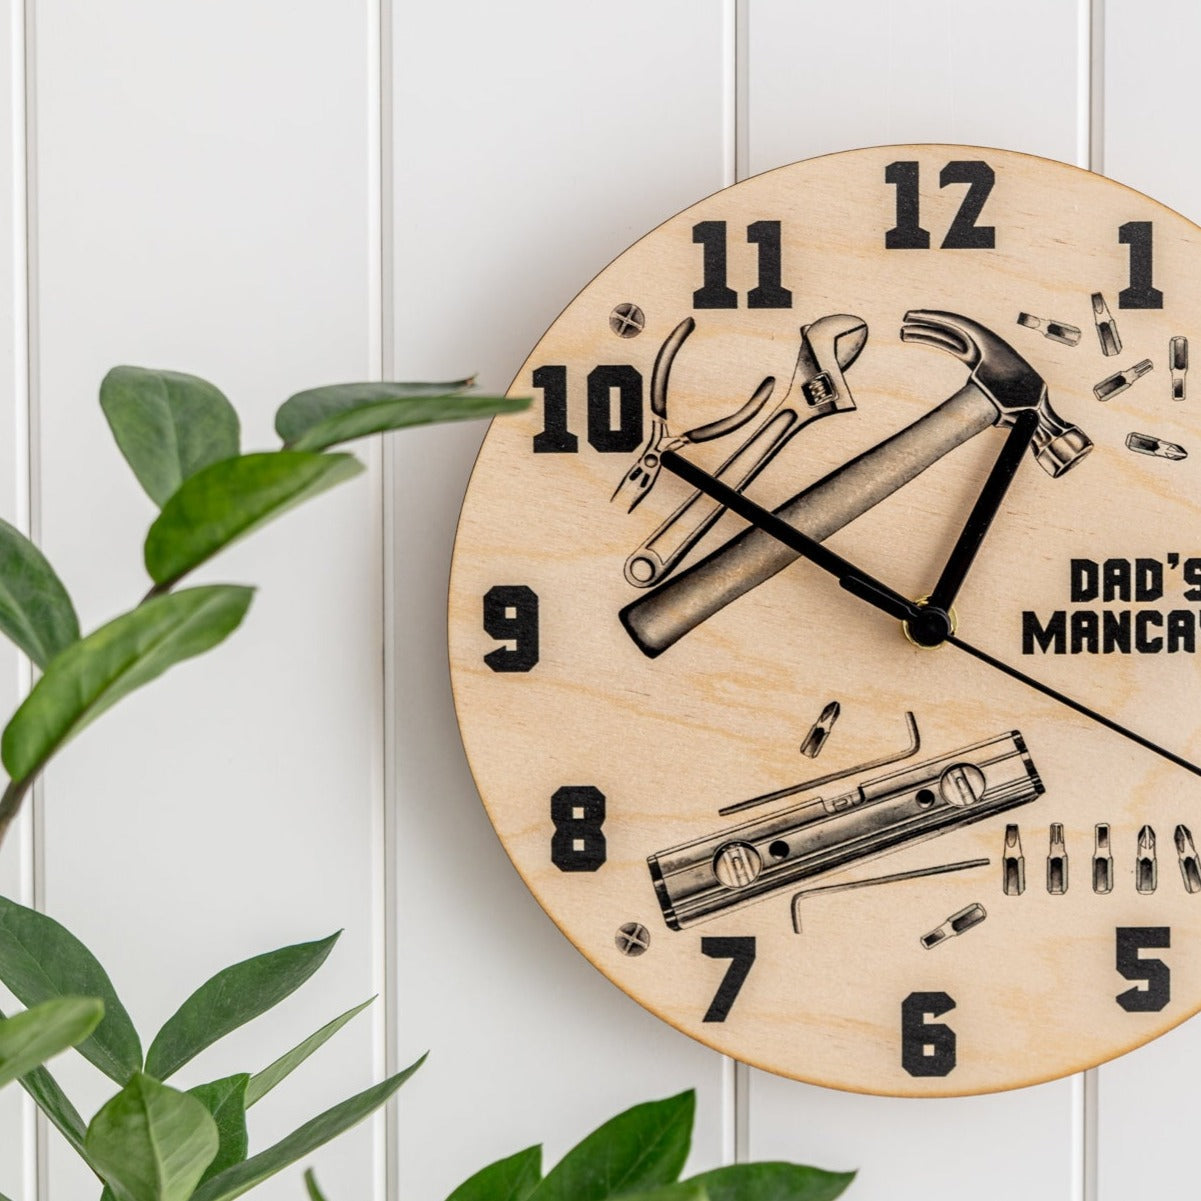 Personalised Wooden DIY Tools Man Cave Clock